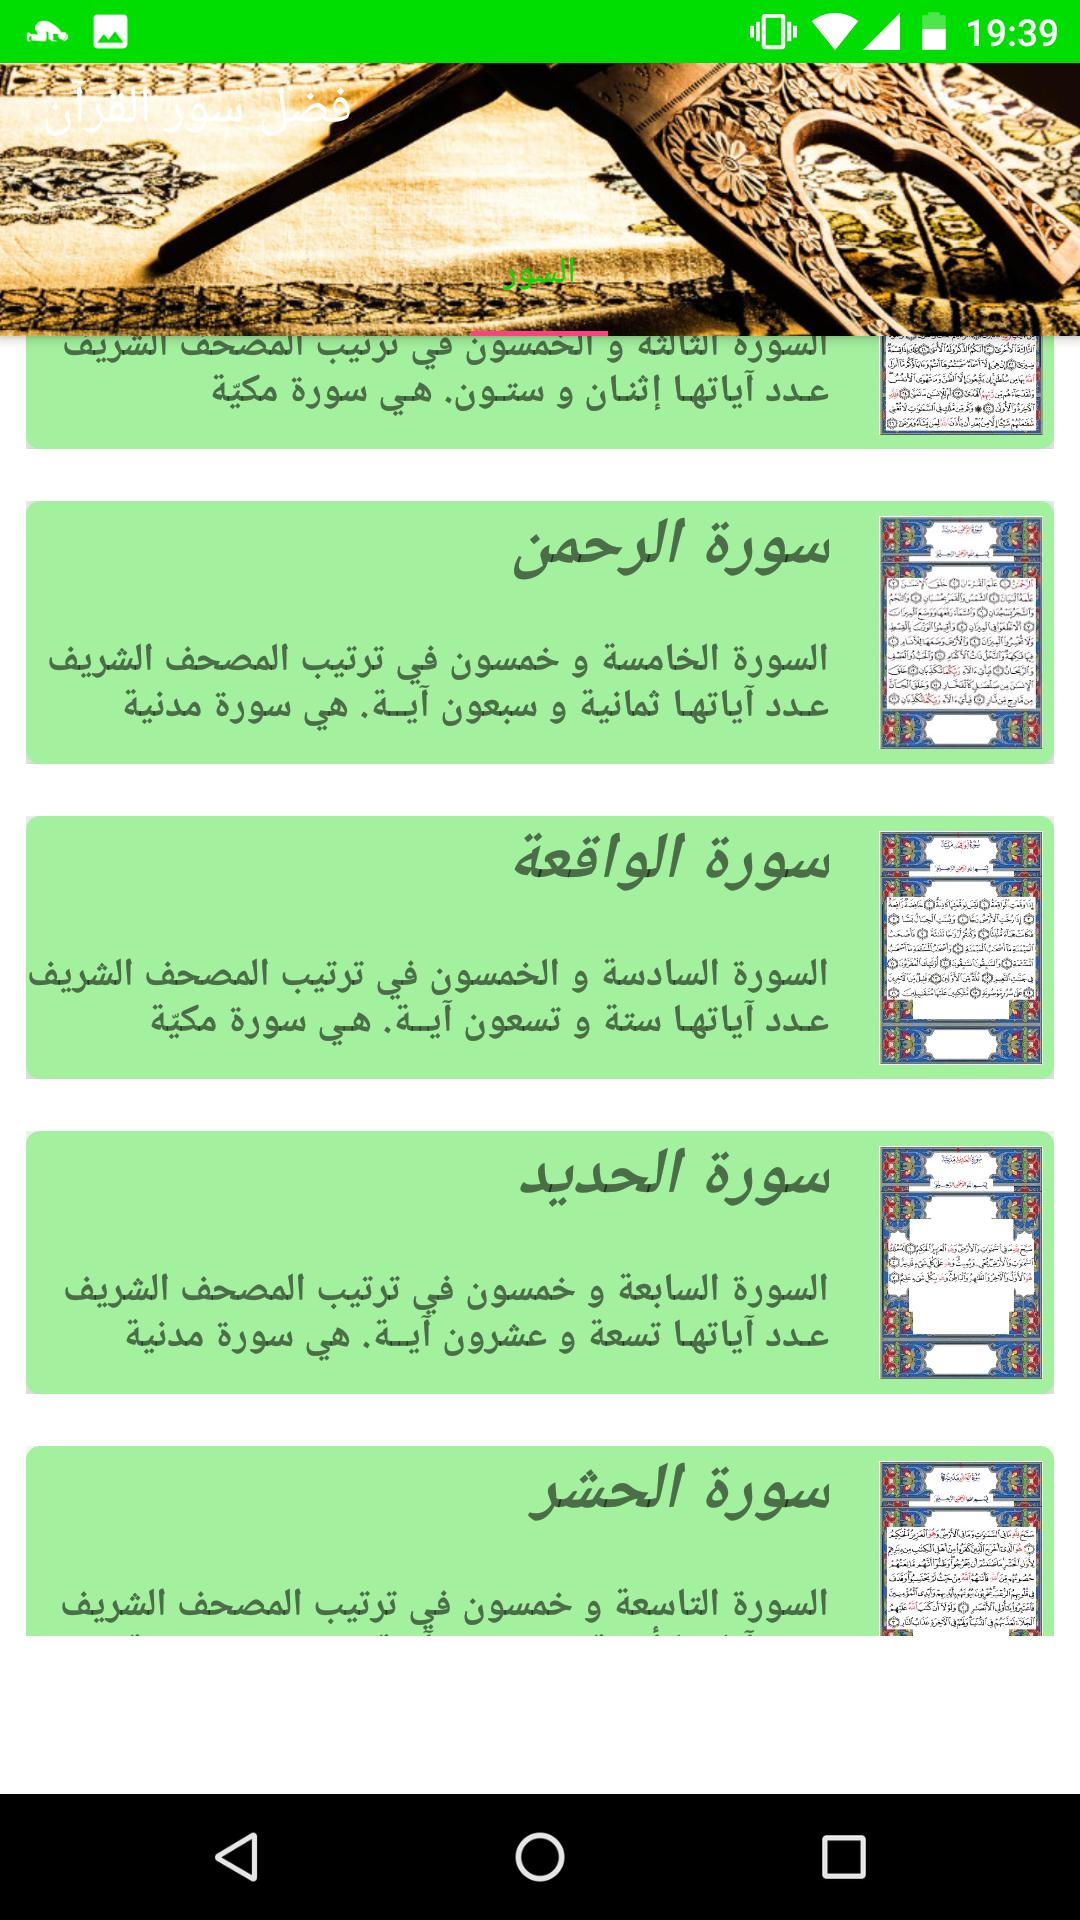 فضل سور القرآن for Android - APK Download